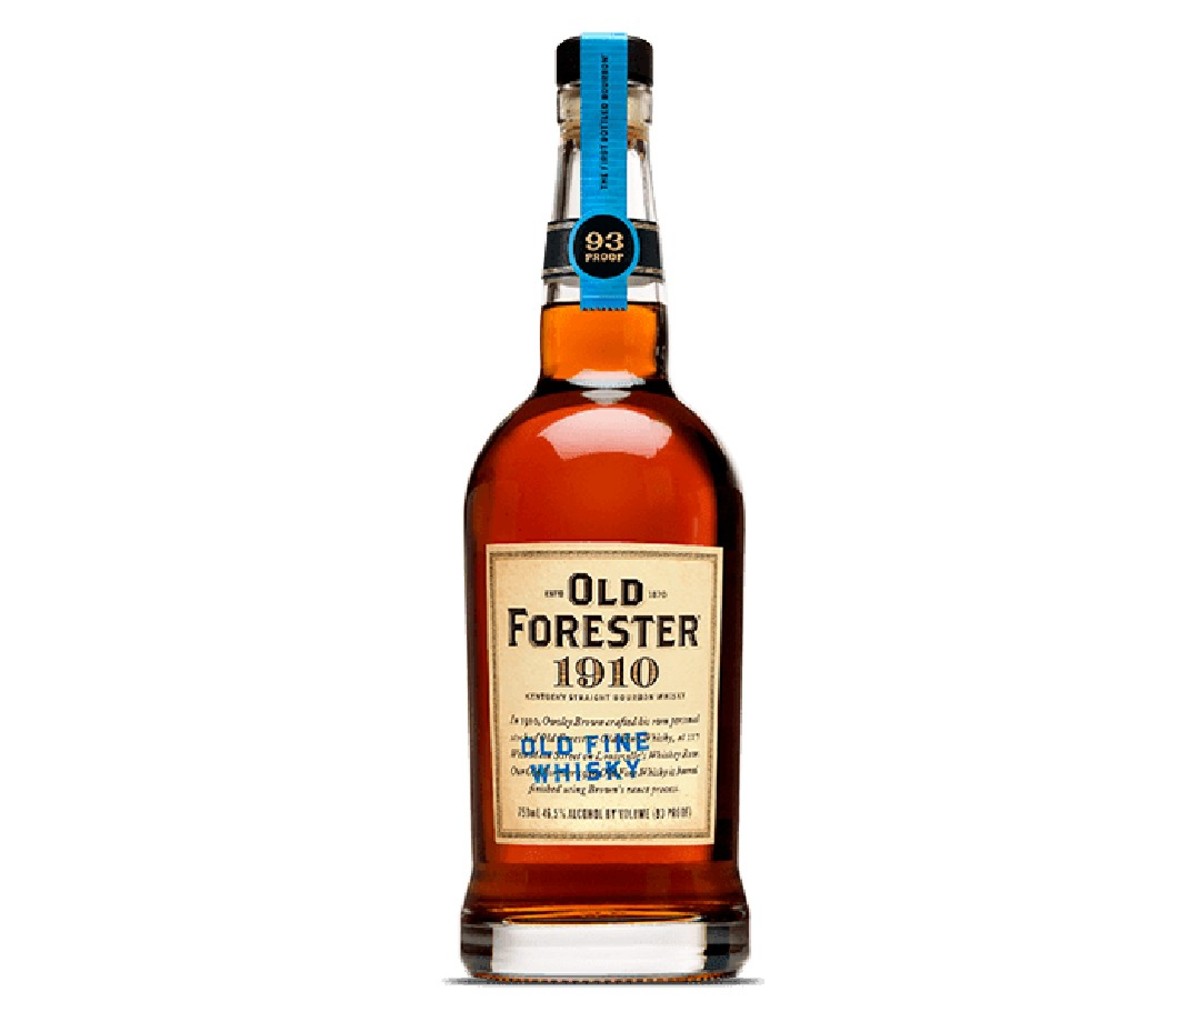 Bottle of Old Forester 1910 whisky